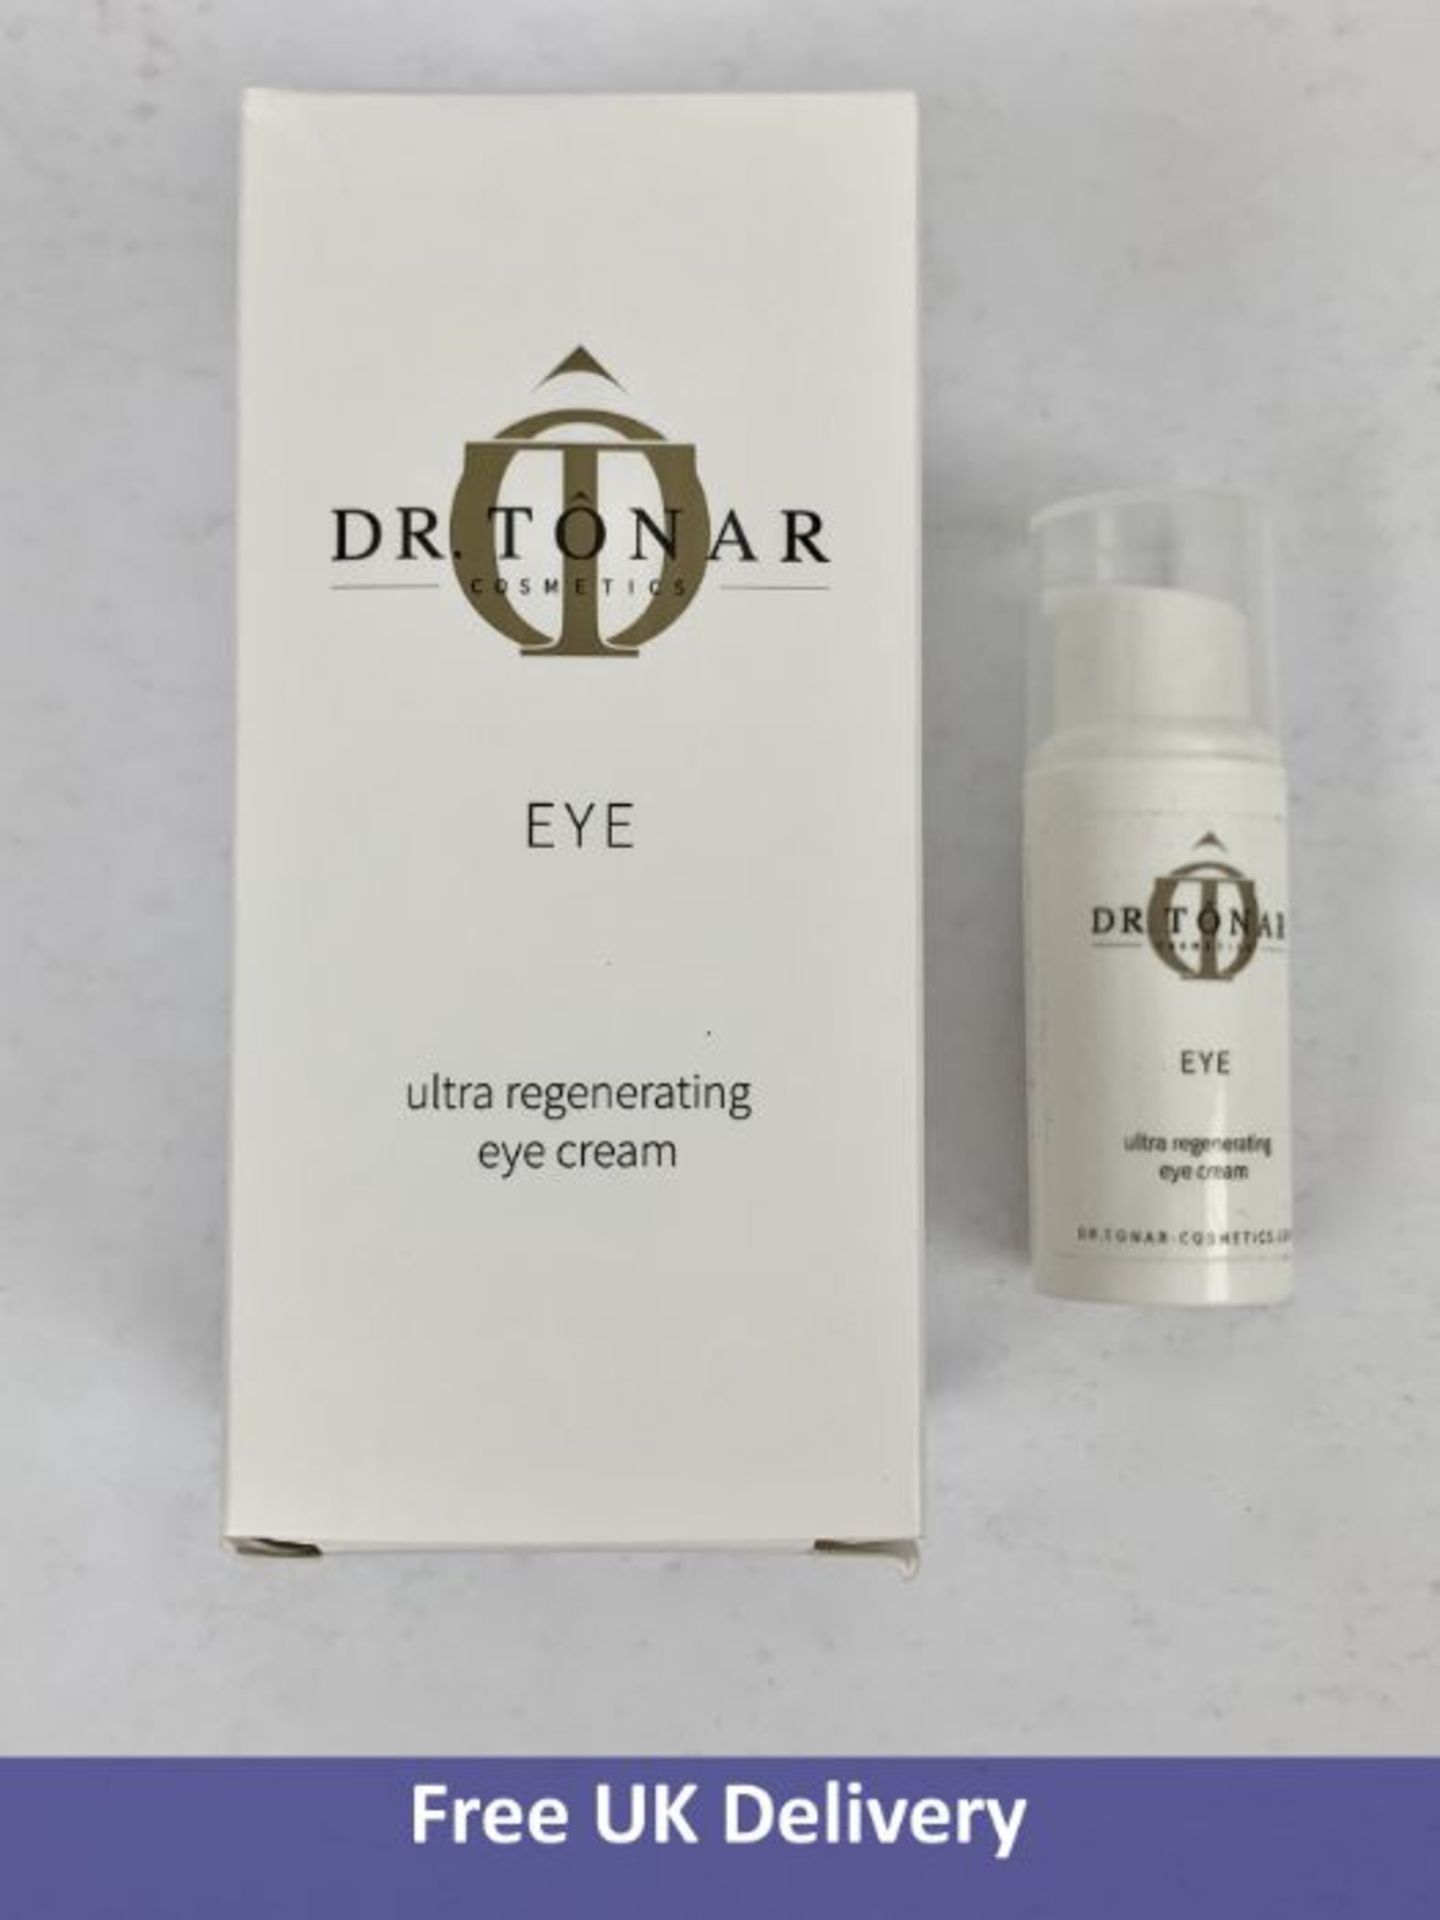 Dr. Tonar Cosmetics Skin Care Eye Cream 15ml and 1x 5ml mini